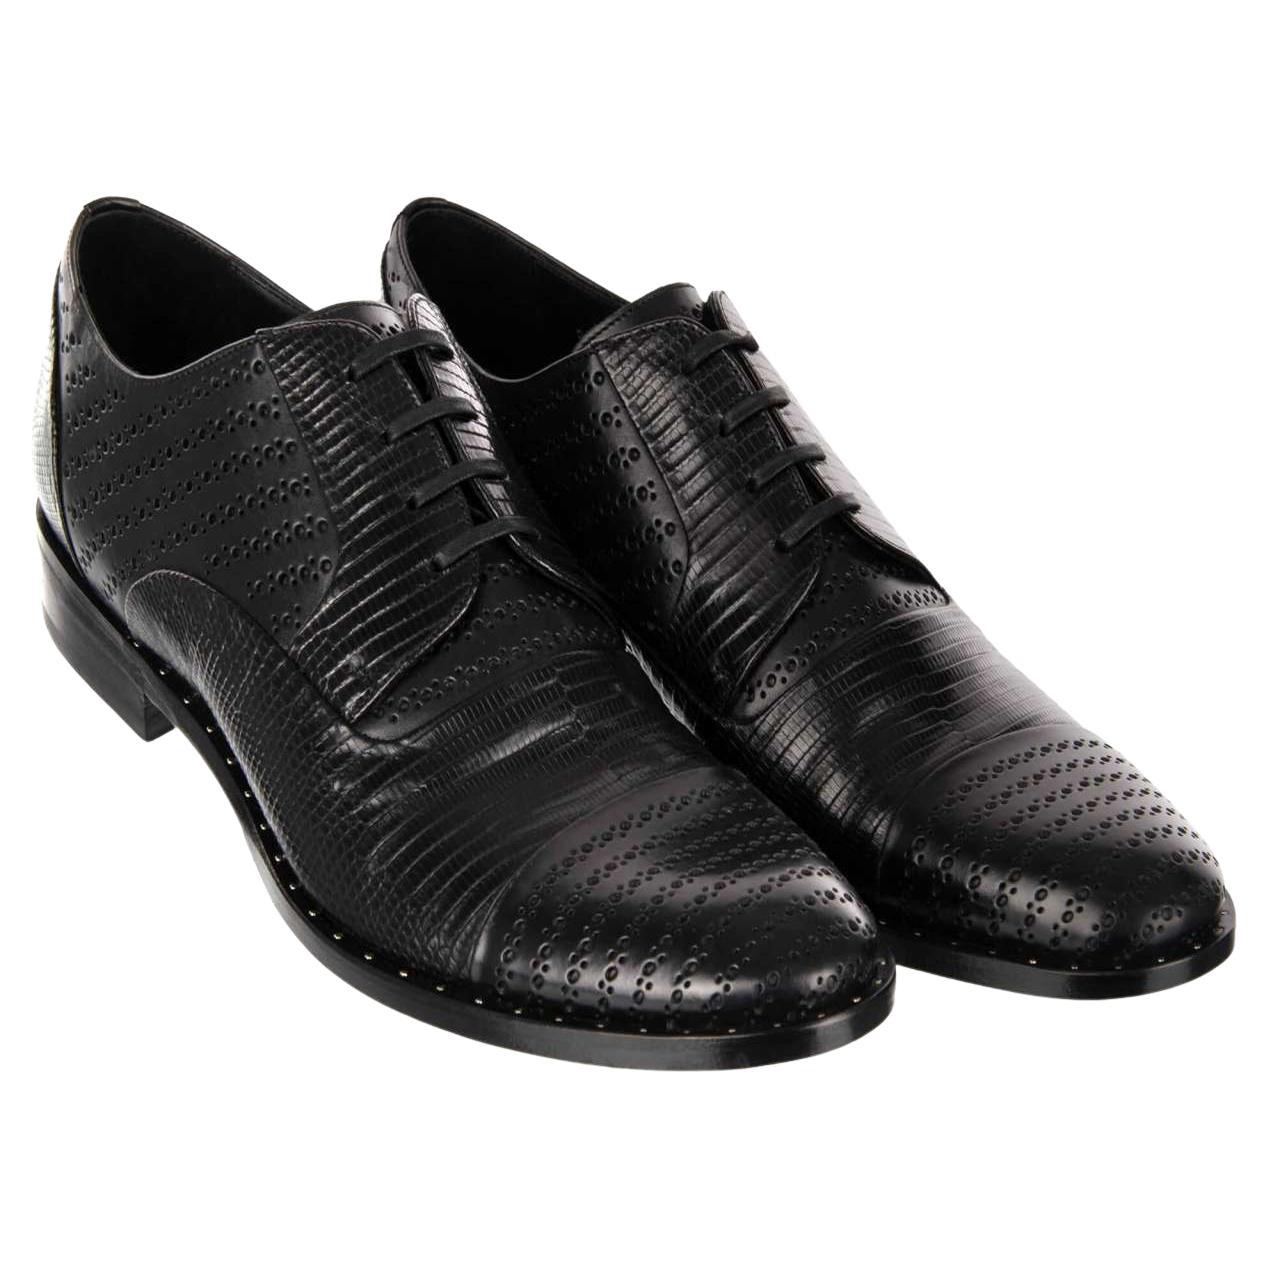 D&G Formal Patchwork Lizard Leather Derby Shoes NAPOLI Black 44 UK 10 US 11 For Sale